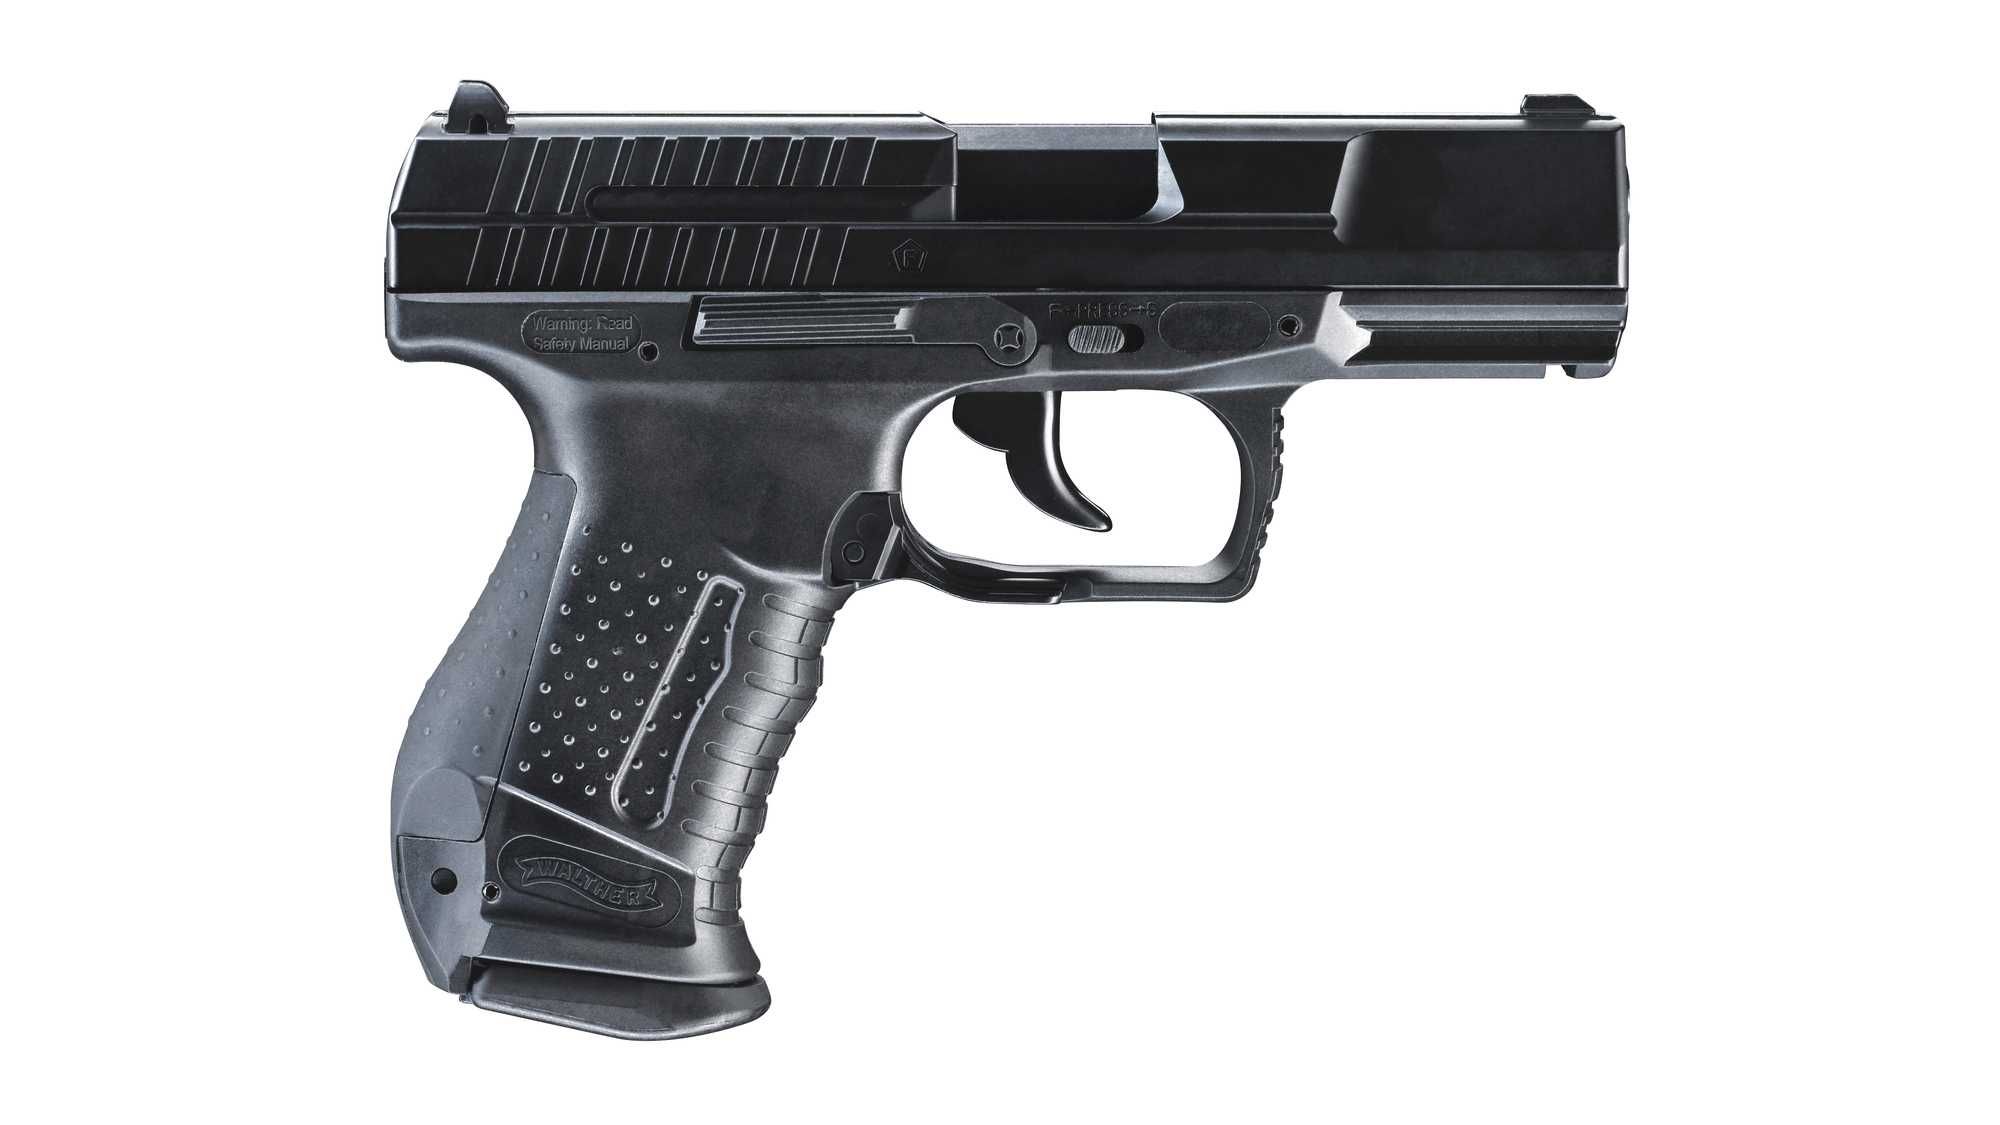 Pistol Walther P99 4,5 Joules Umarex Upgrade